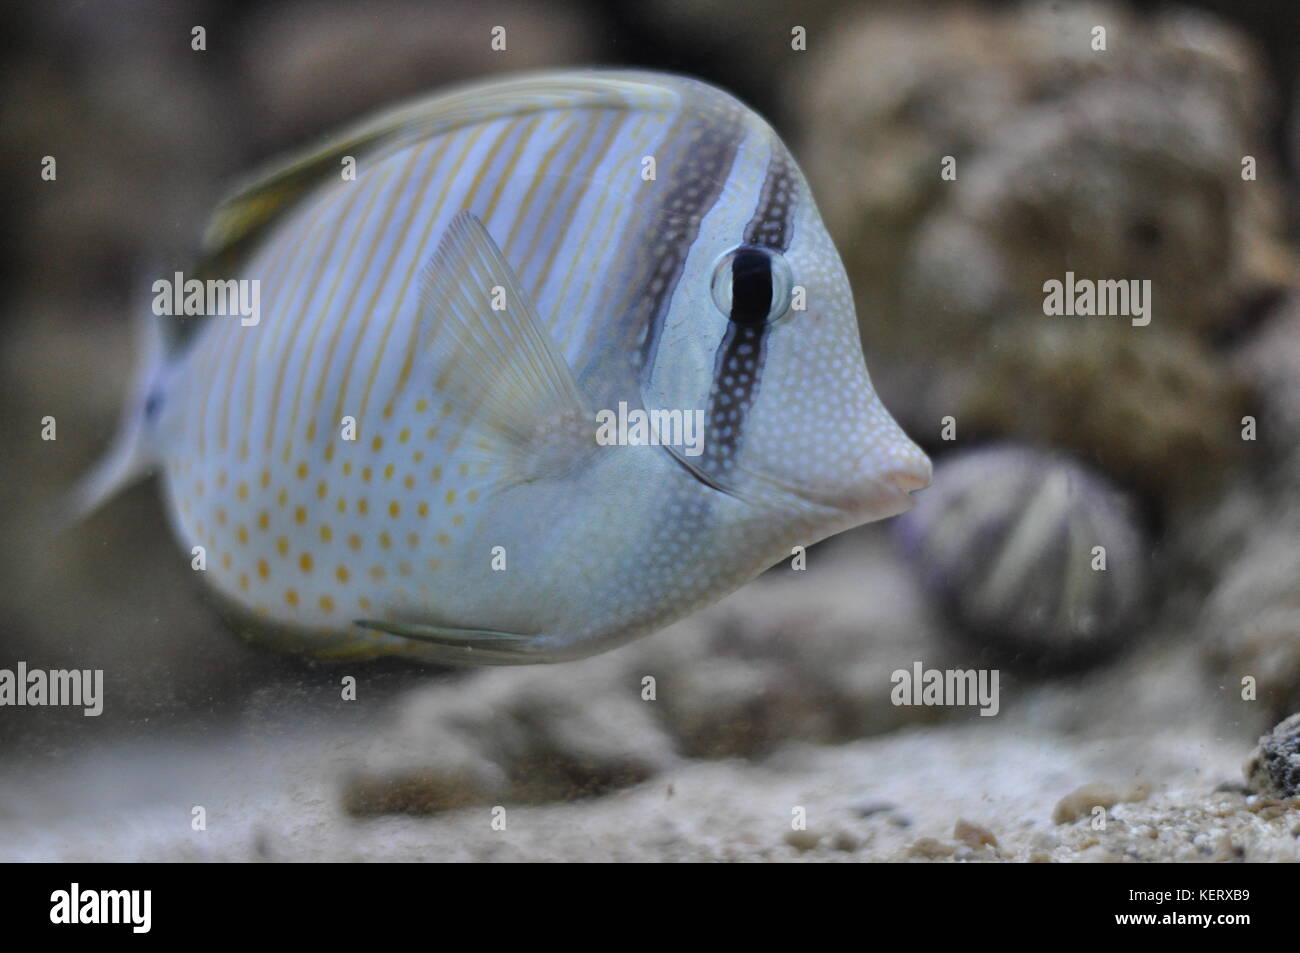 Poissons de mer - sailfin tang - poisson chirurgien Banque D'Images